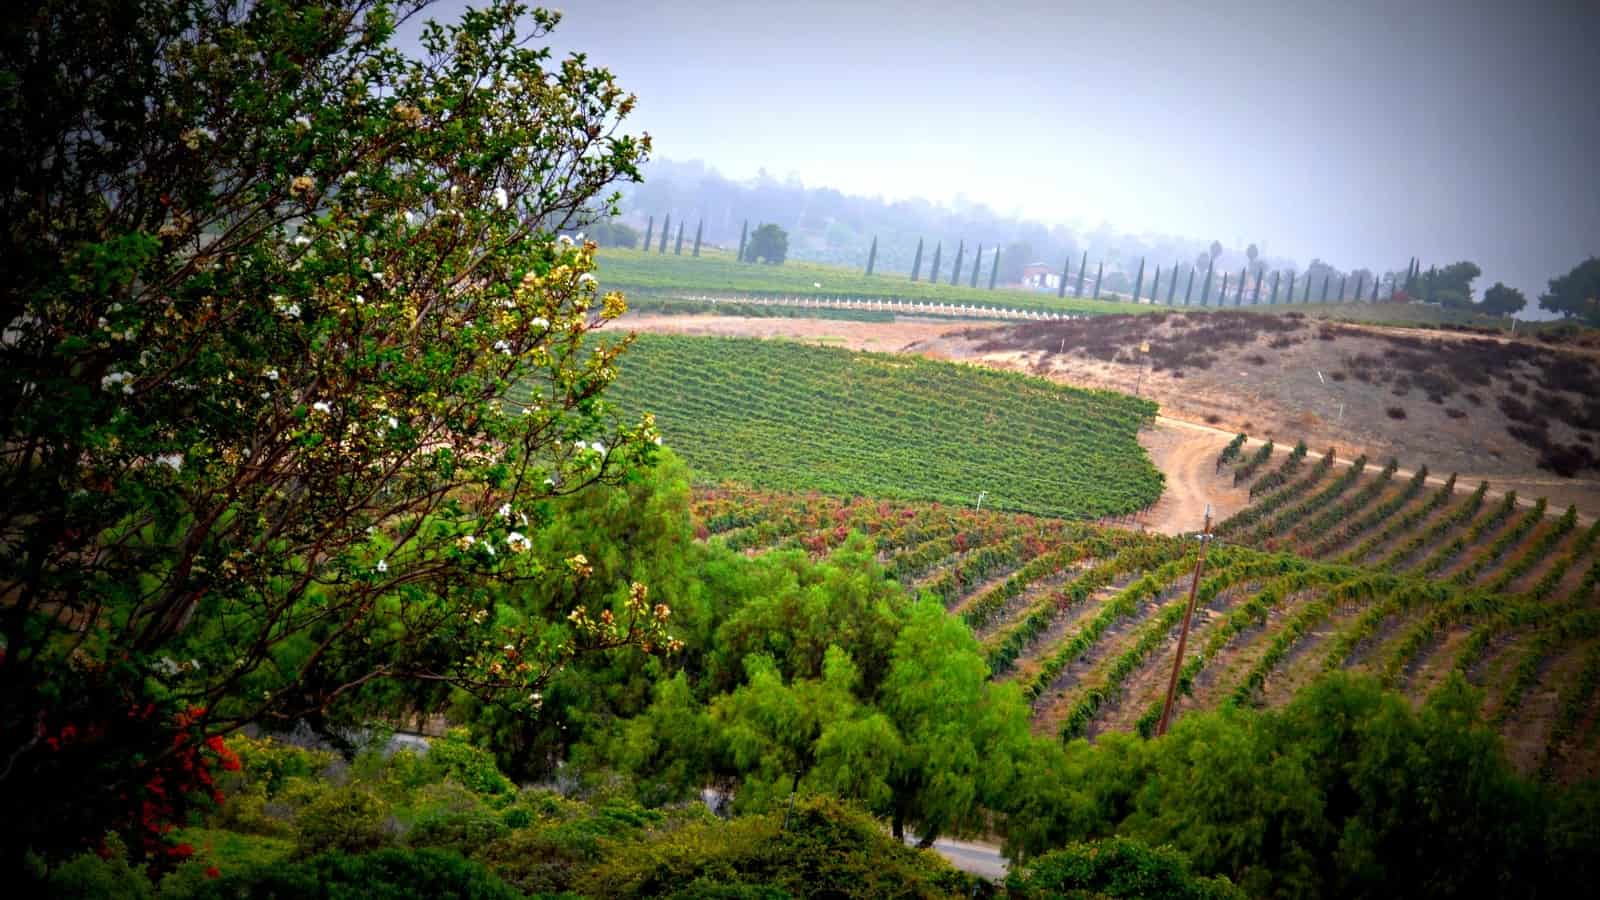 Temecula Valley with vineyard